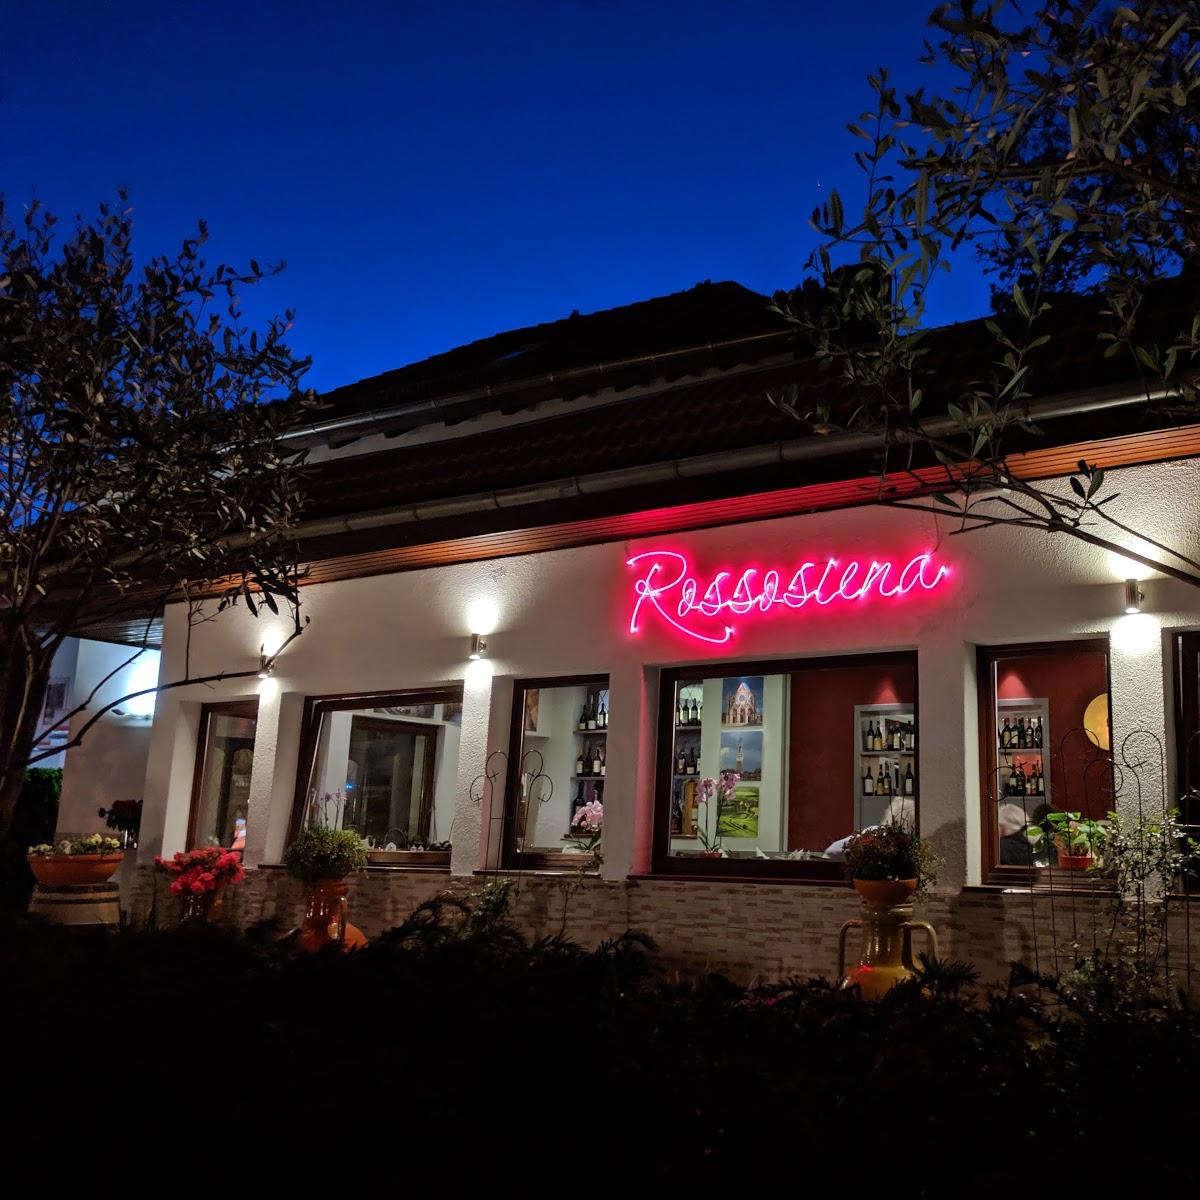 Restaurant "Ristorante Rossosiena" in  Berlin